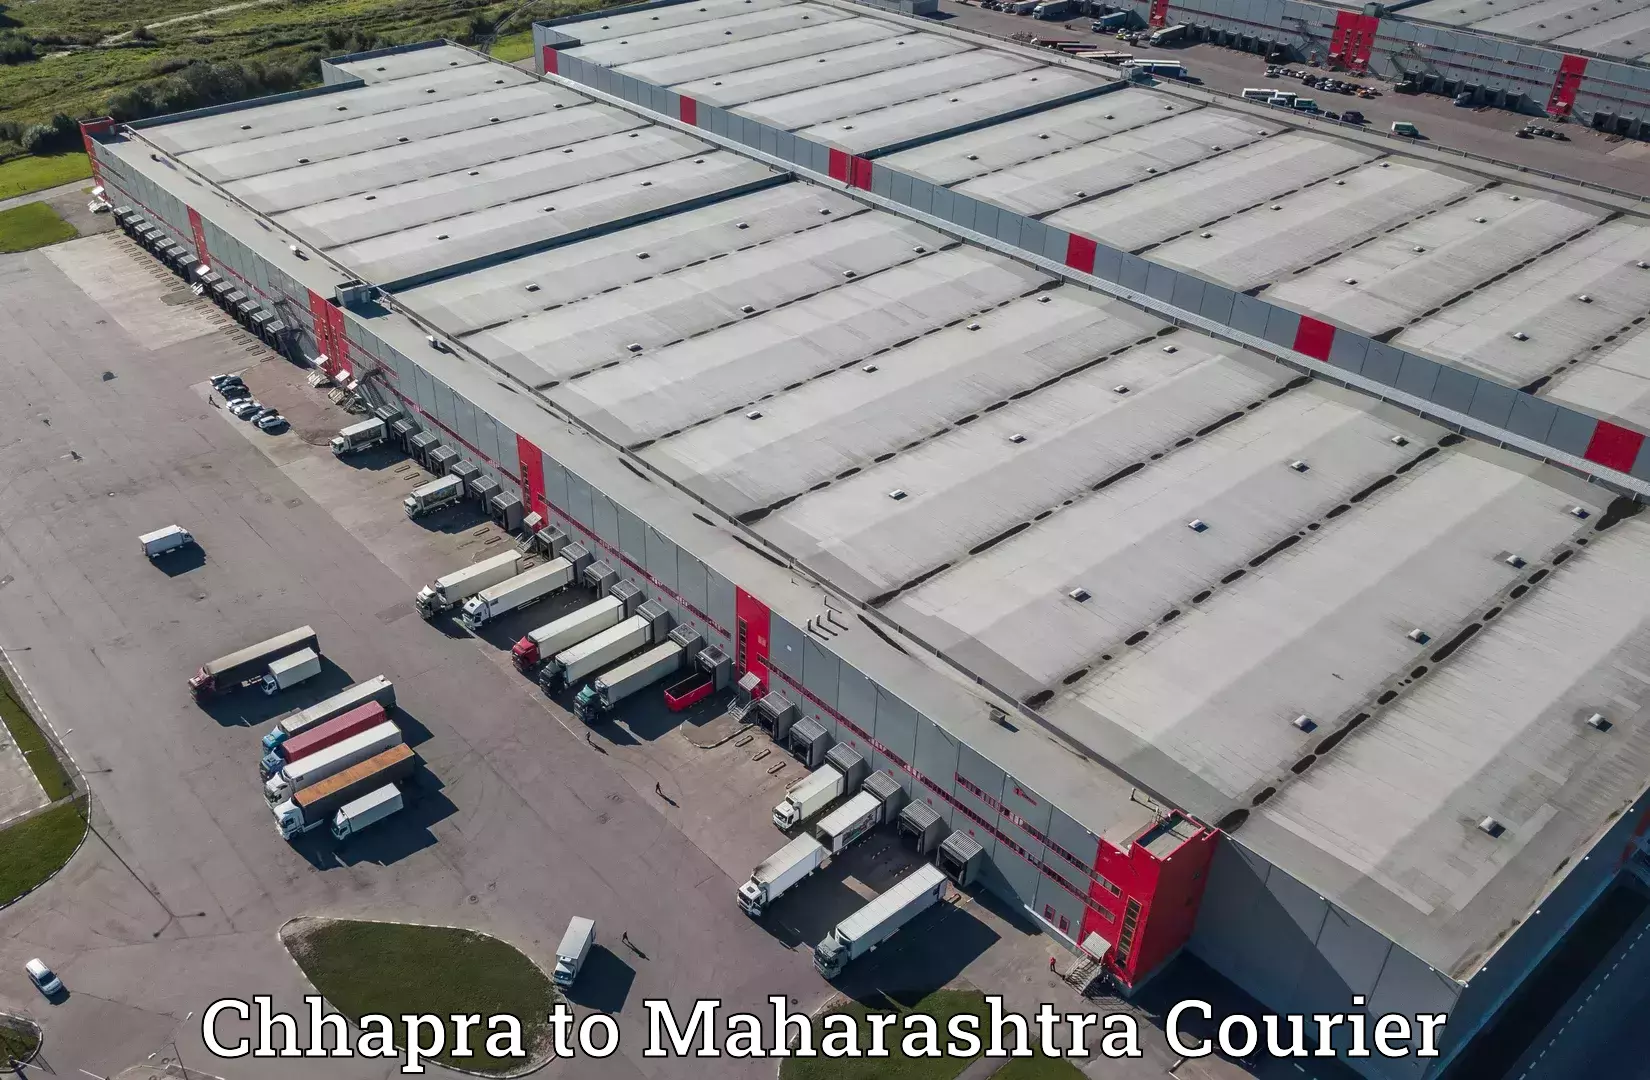 Smart shipping technology Chhapra to Mahabaleshwar